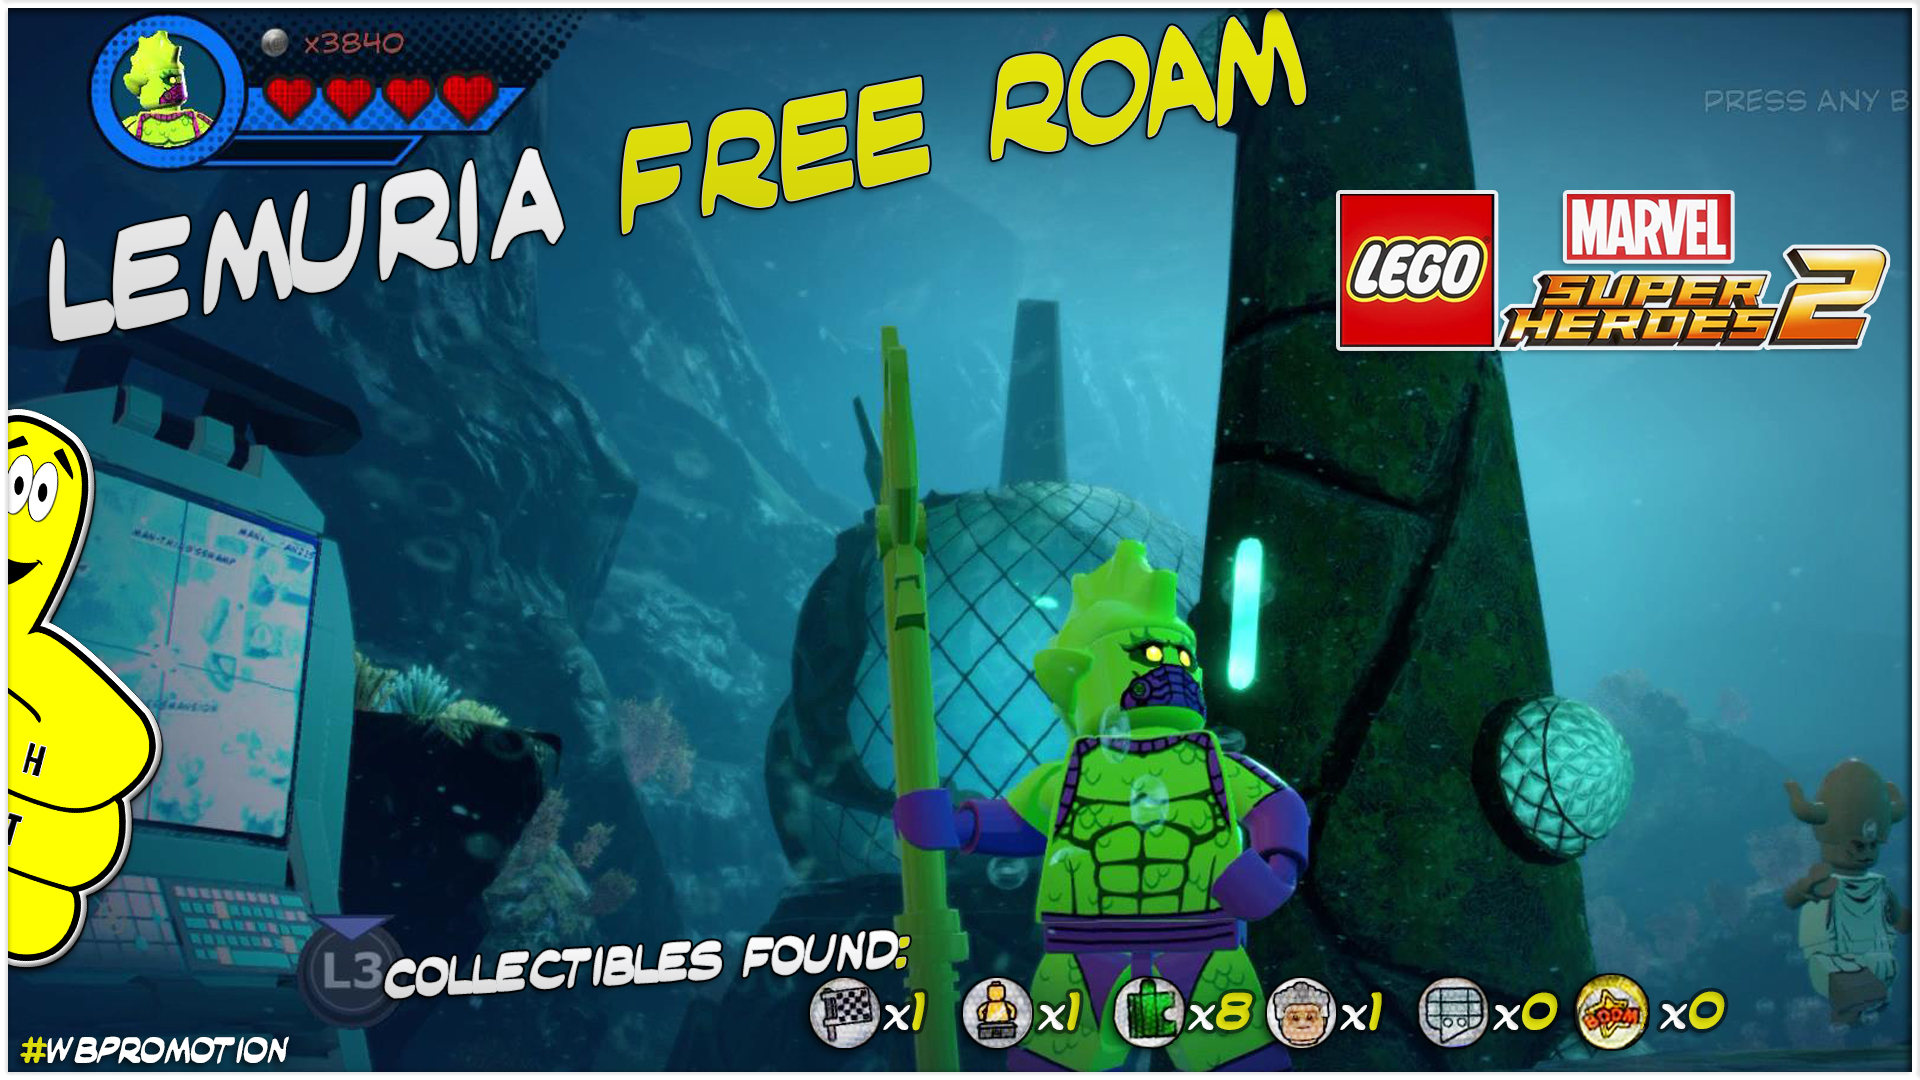 Lego Marvel Superheroes 2: Lemuria FREE ROAM (All Collectibles) – HTG